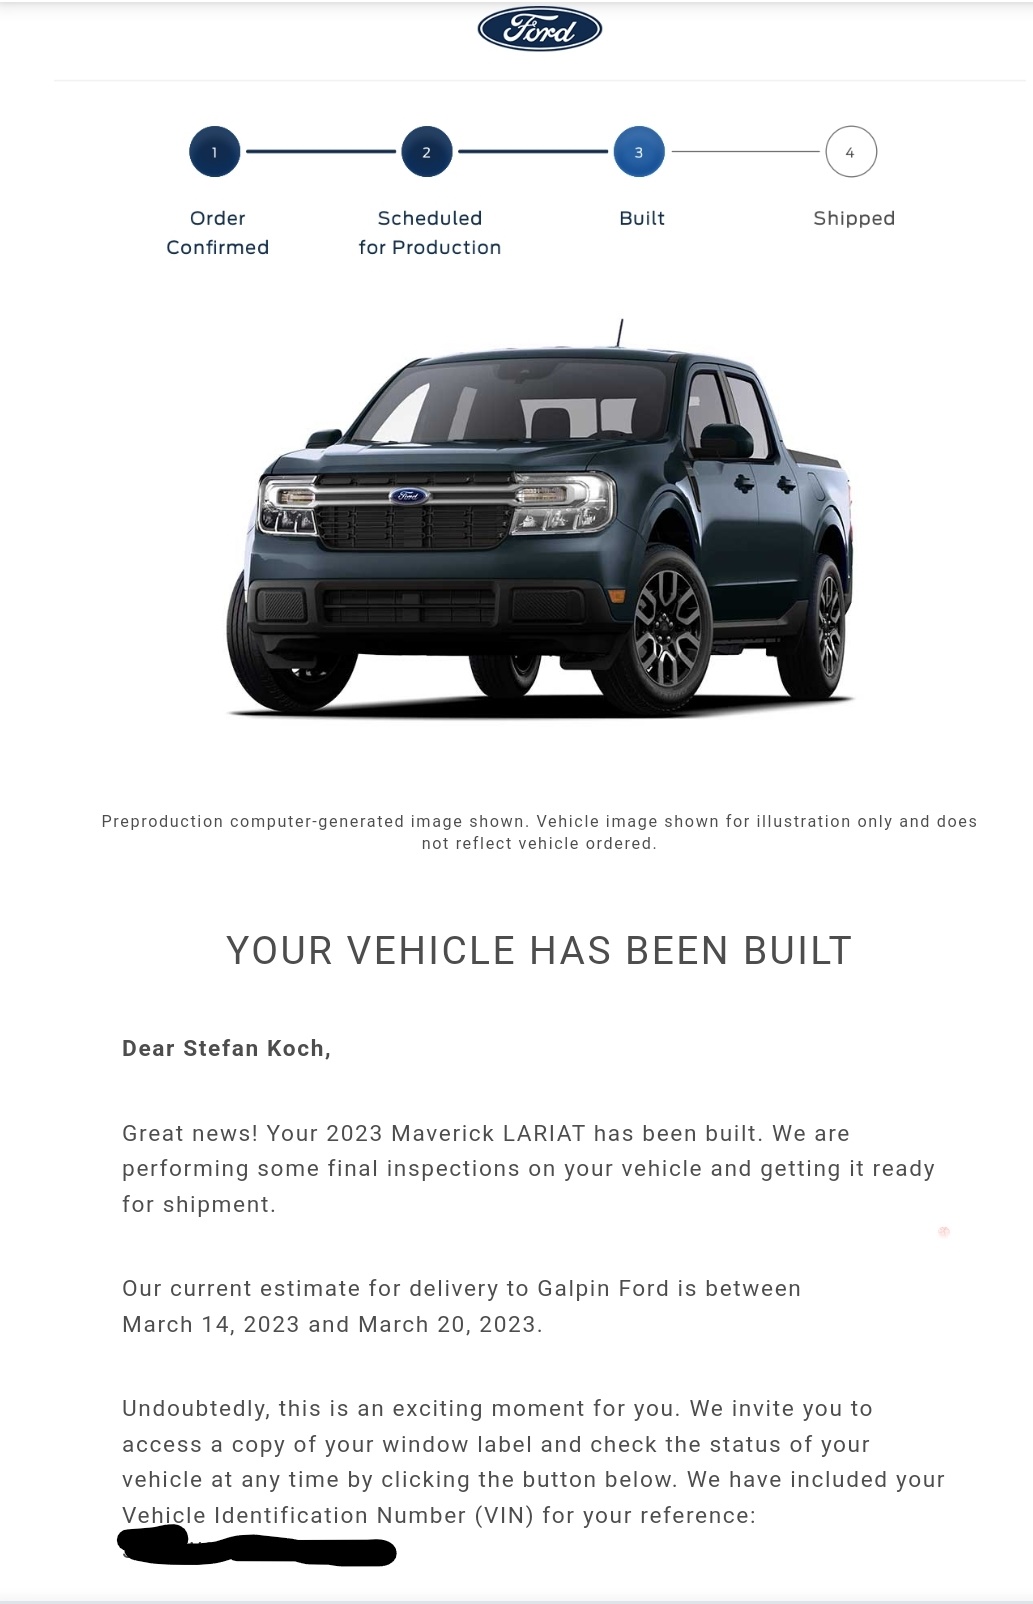 Ford Maverick 2.0 Eco build AWD dates InkedScreenshot_20230302-060939_AOL